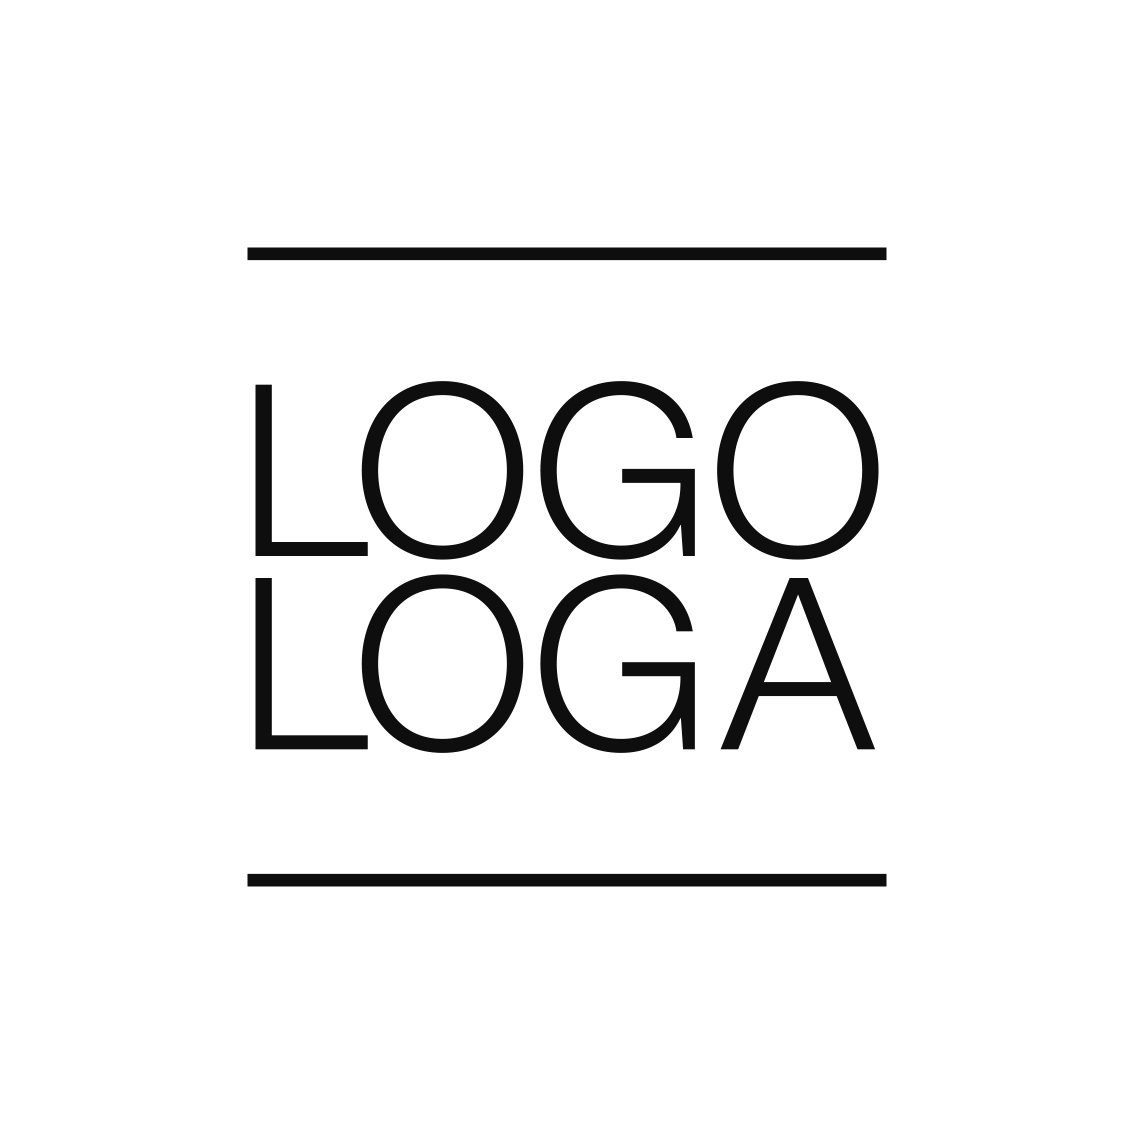 Logologa design studio